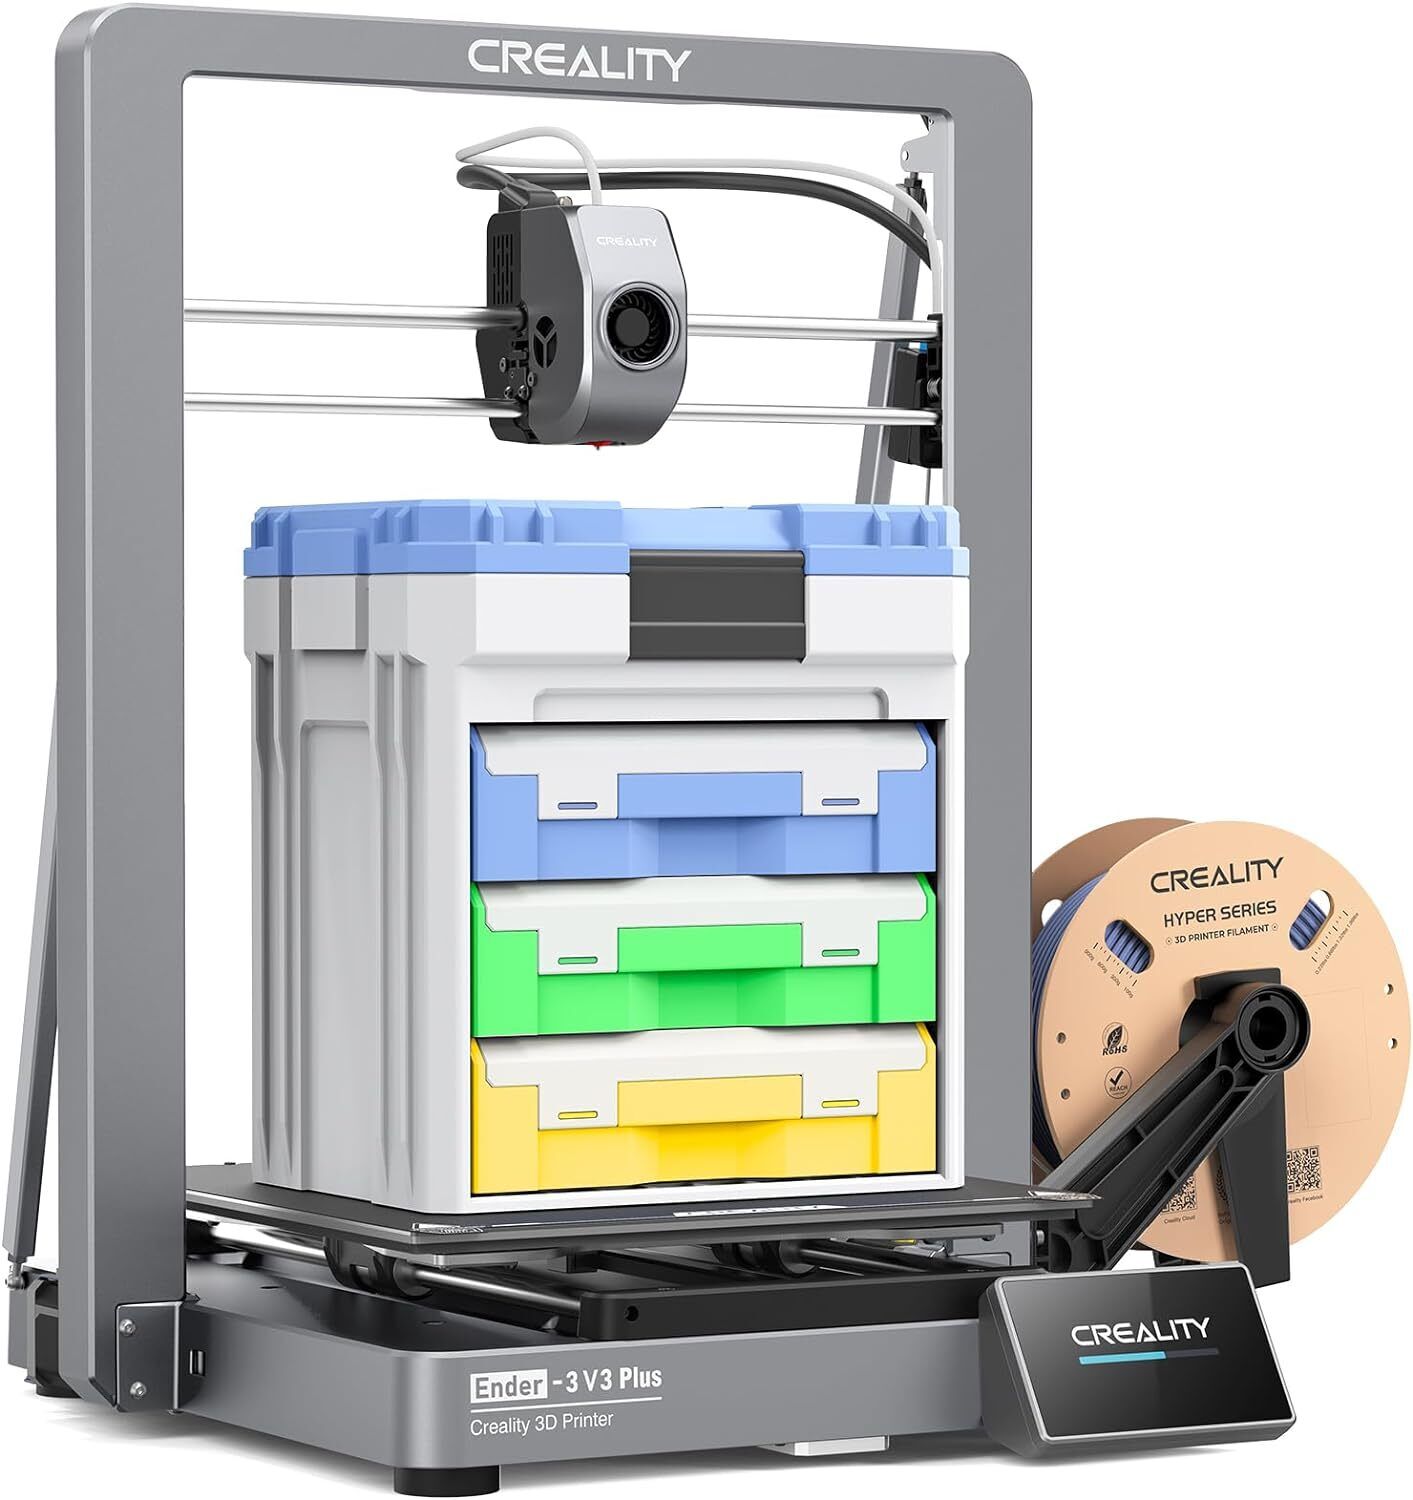 Creality Ender 3 V3 Plus 3D Printer CoreXZ 600mm/s High-Speed Auto Leveling